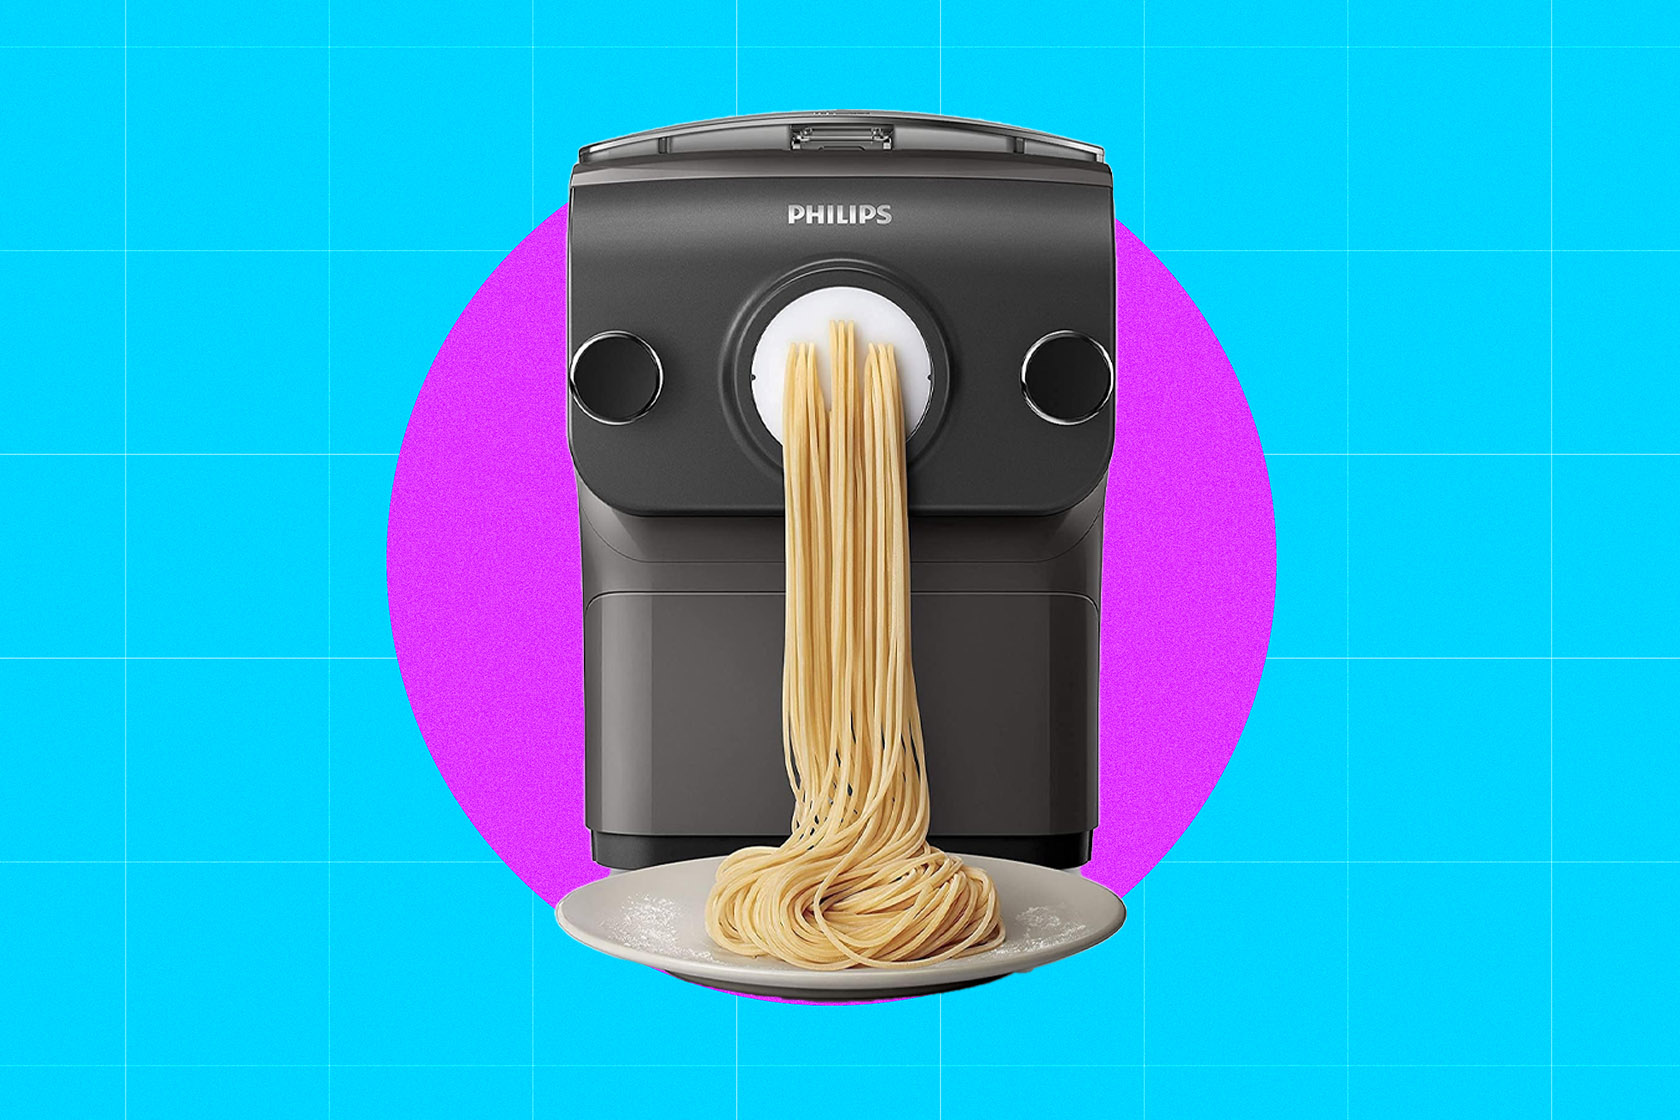 Philips Pasta Maker Makes Fresh Noodles Fast - Smart Pasta Maker